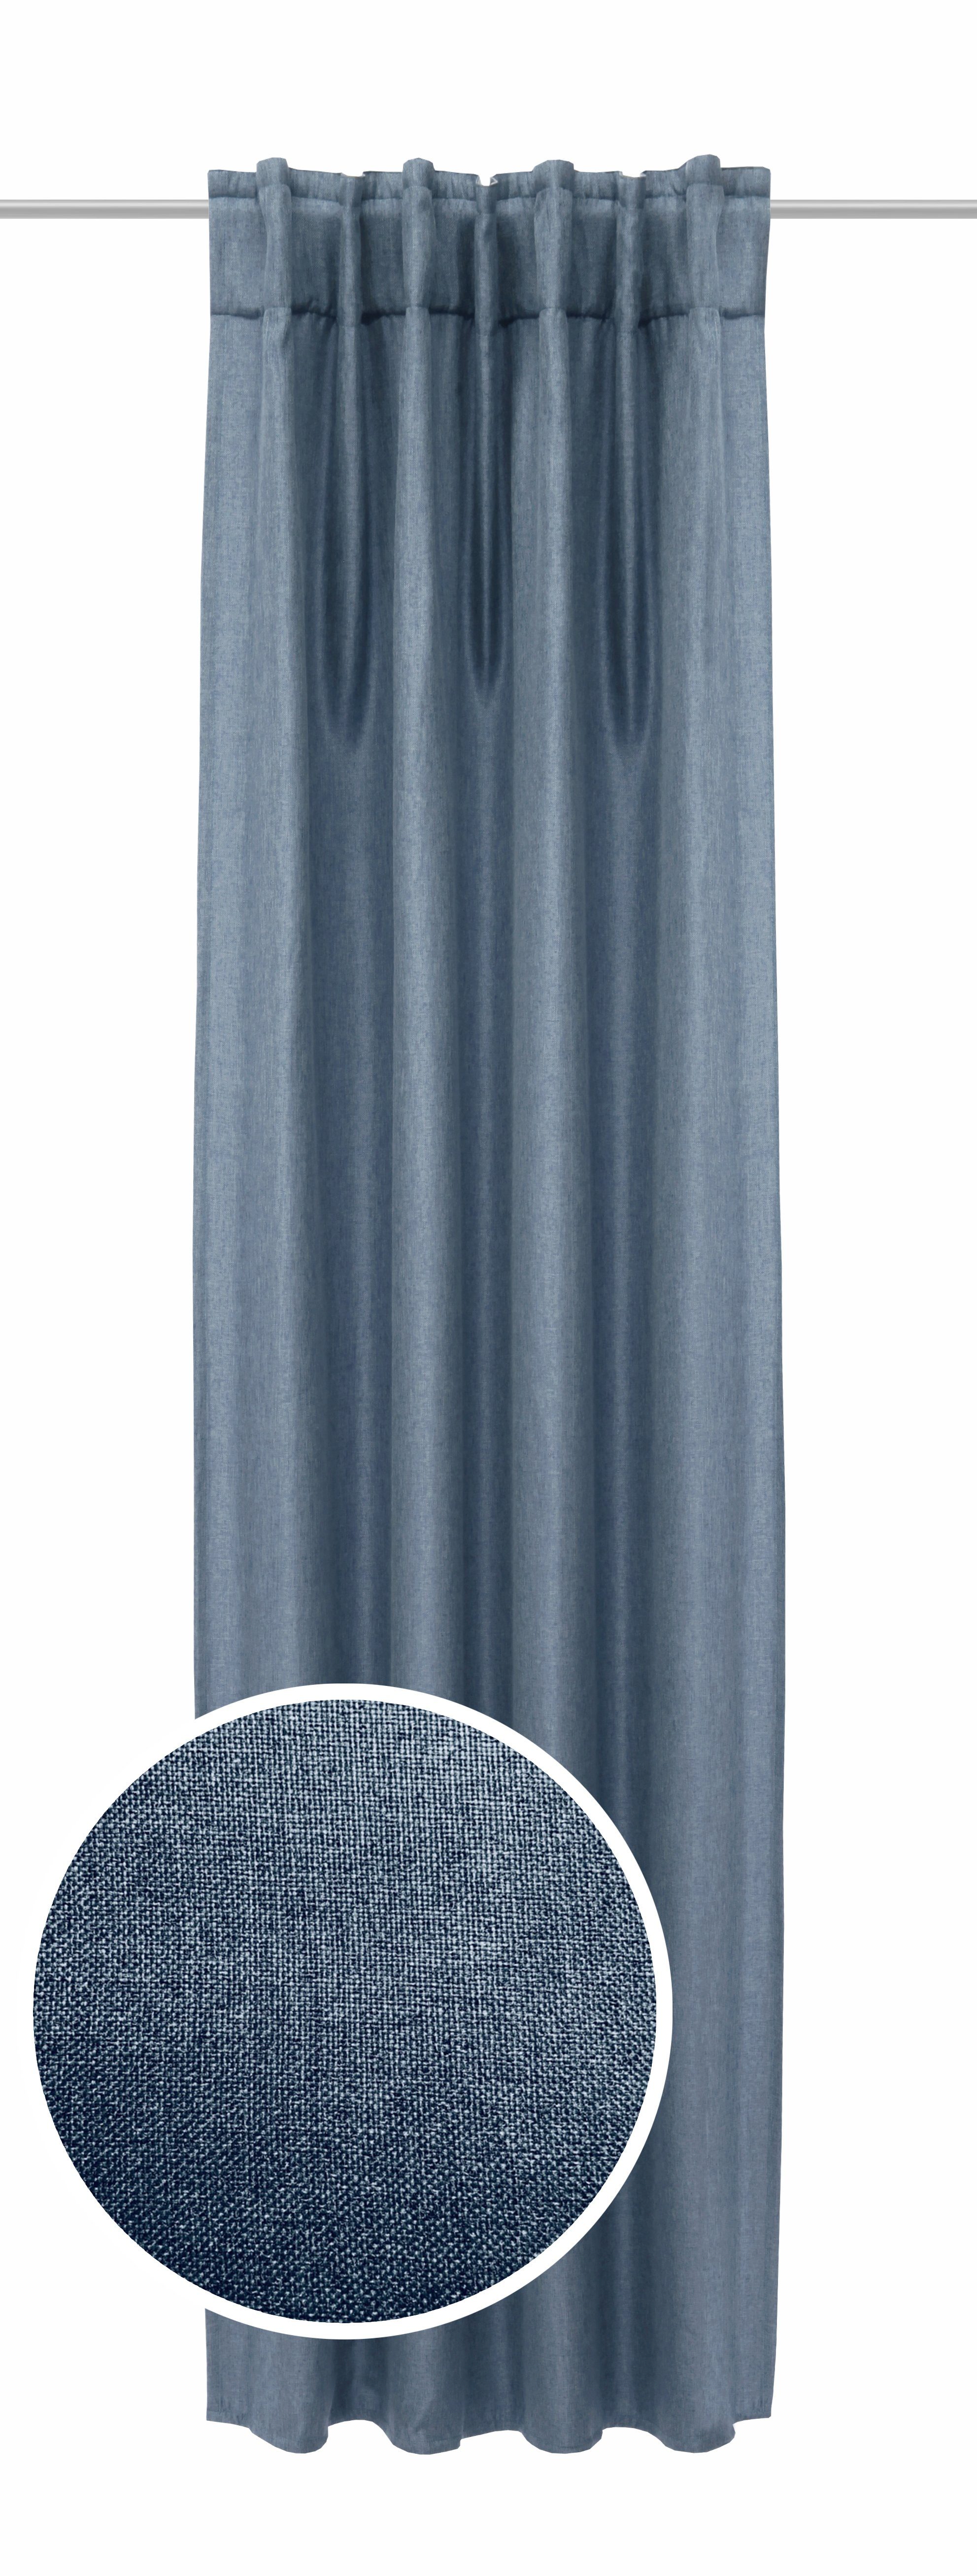 Vorhang Clever-Kauf-24, Leinenoptik, Verdunkelungsvorhang verdunkelnder Jolie Verdunkelungsvorhang jeansblau